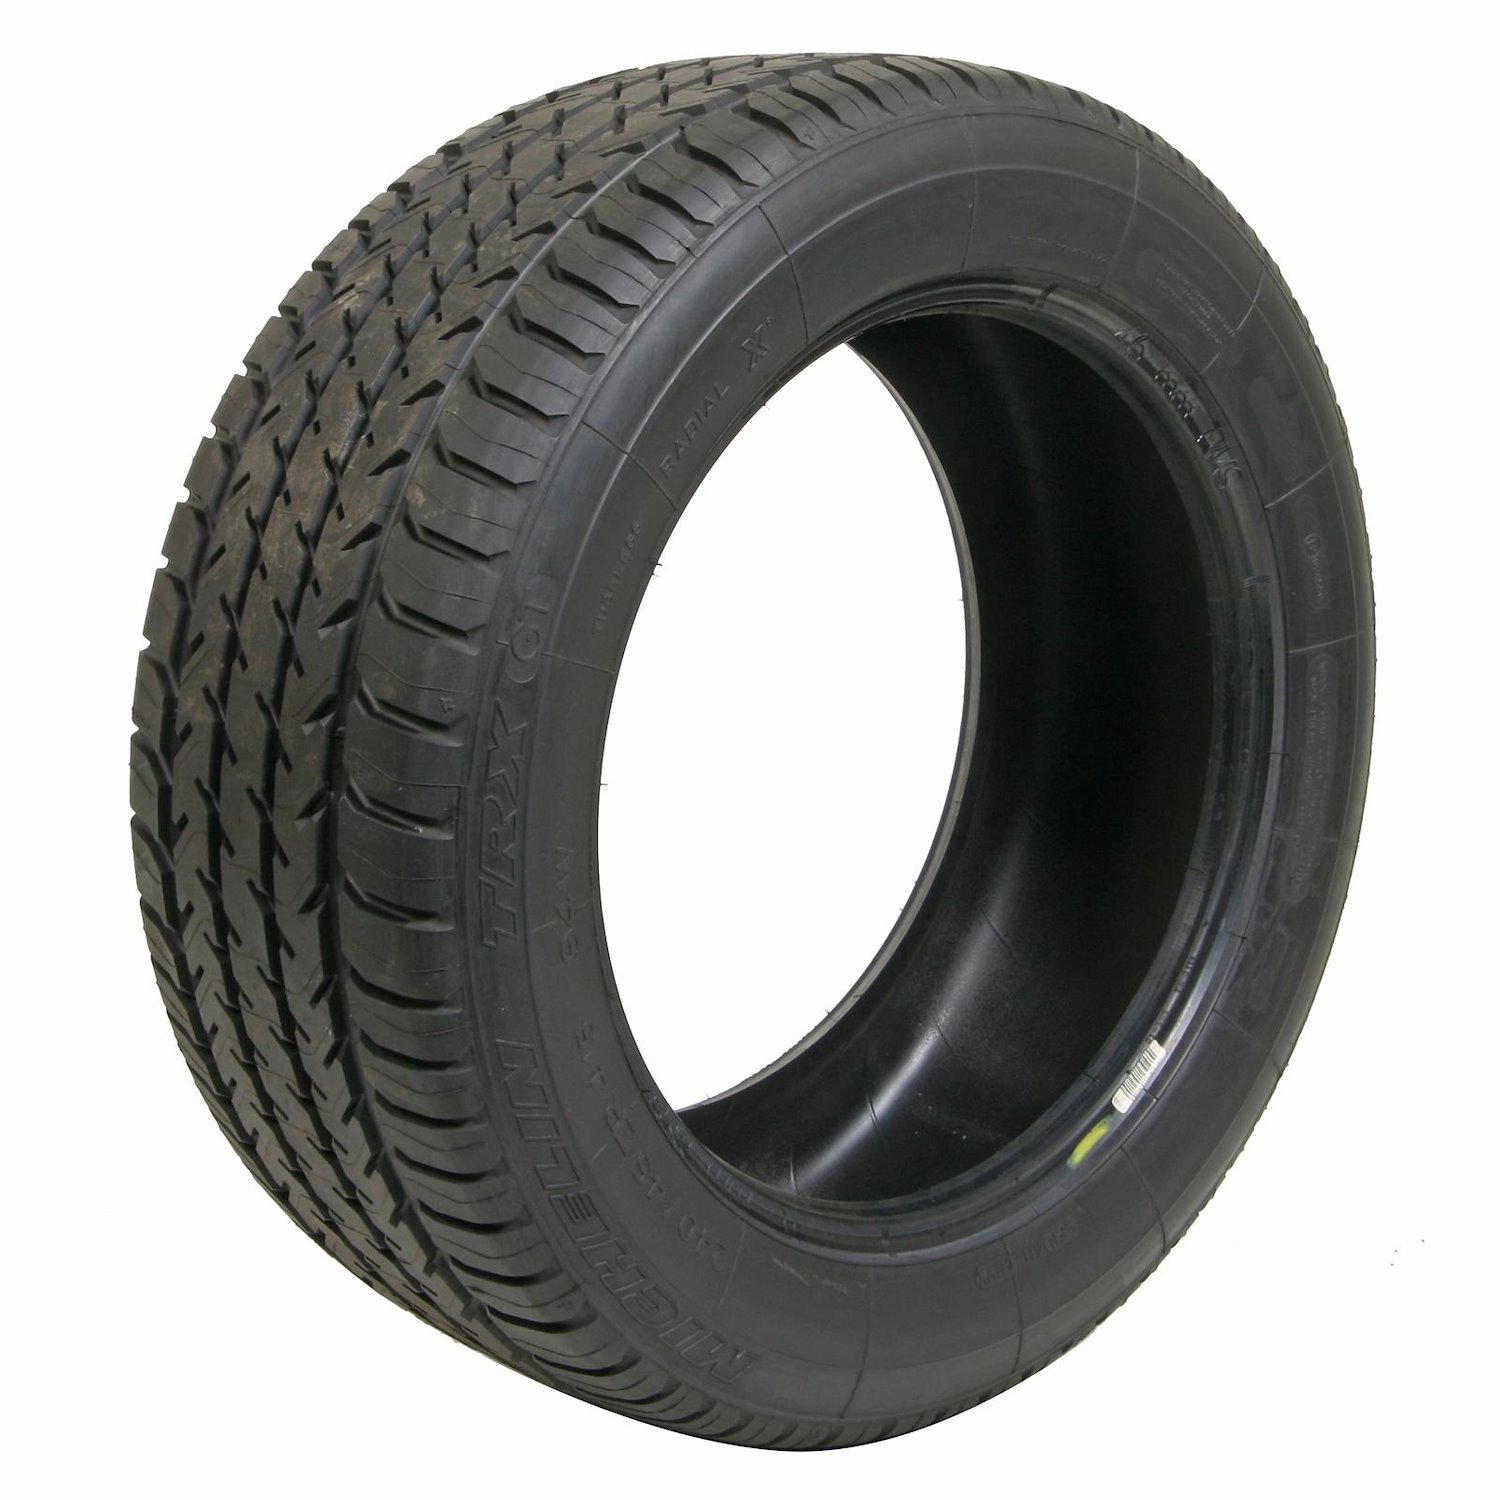 68811 Tire, Michelin TRX GT, 240/45VR415 94W